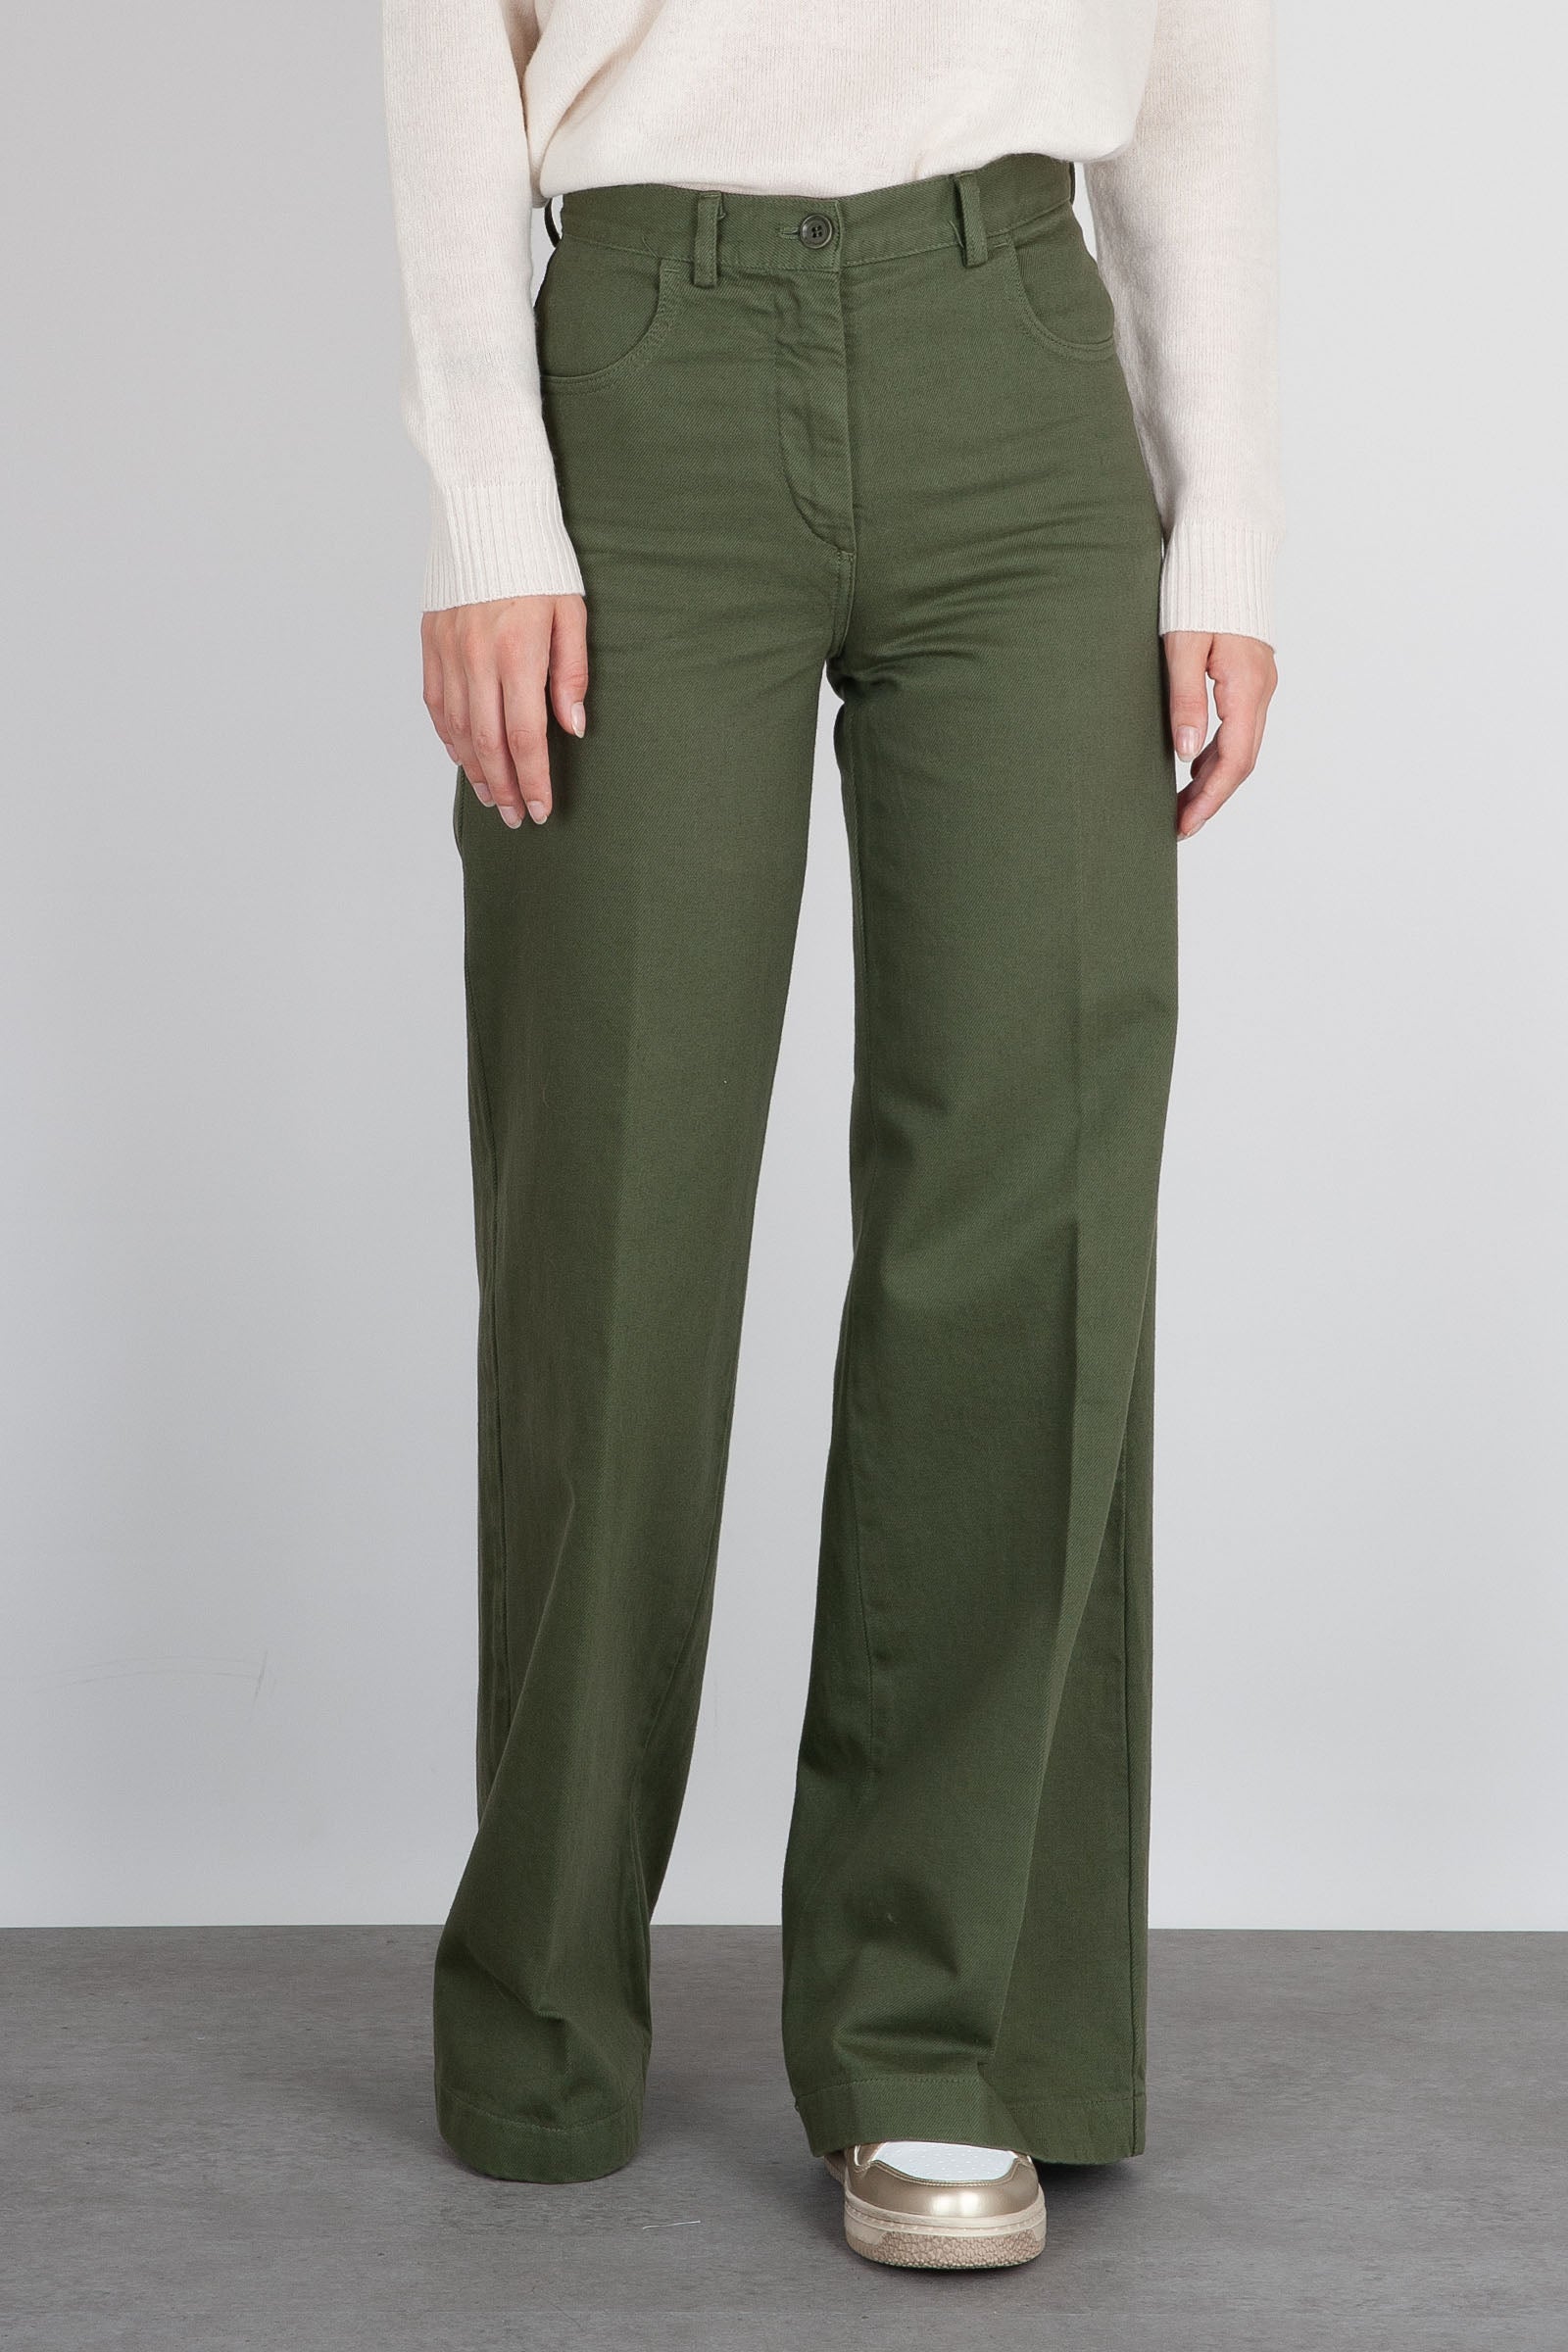 Aspesi Pantalone Ampio Verde Militare in Cotone - 4